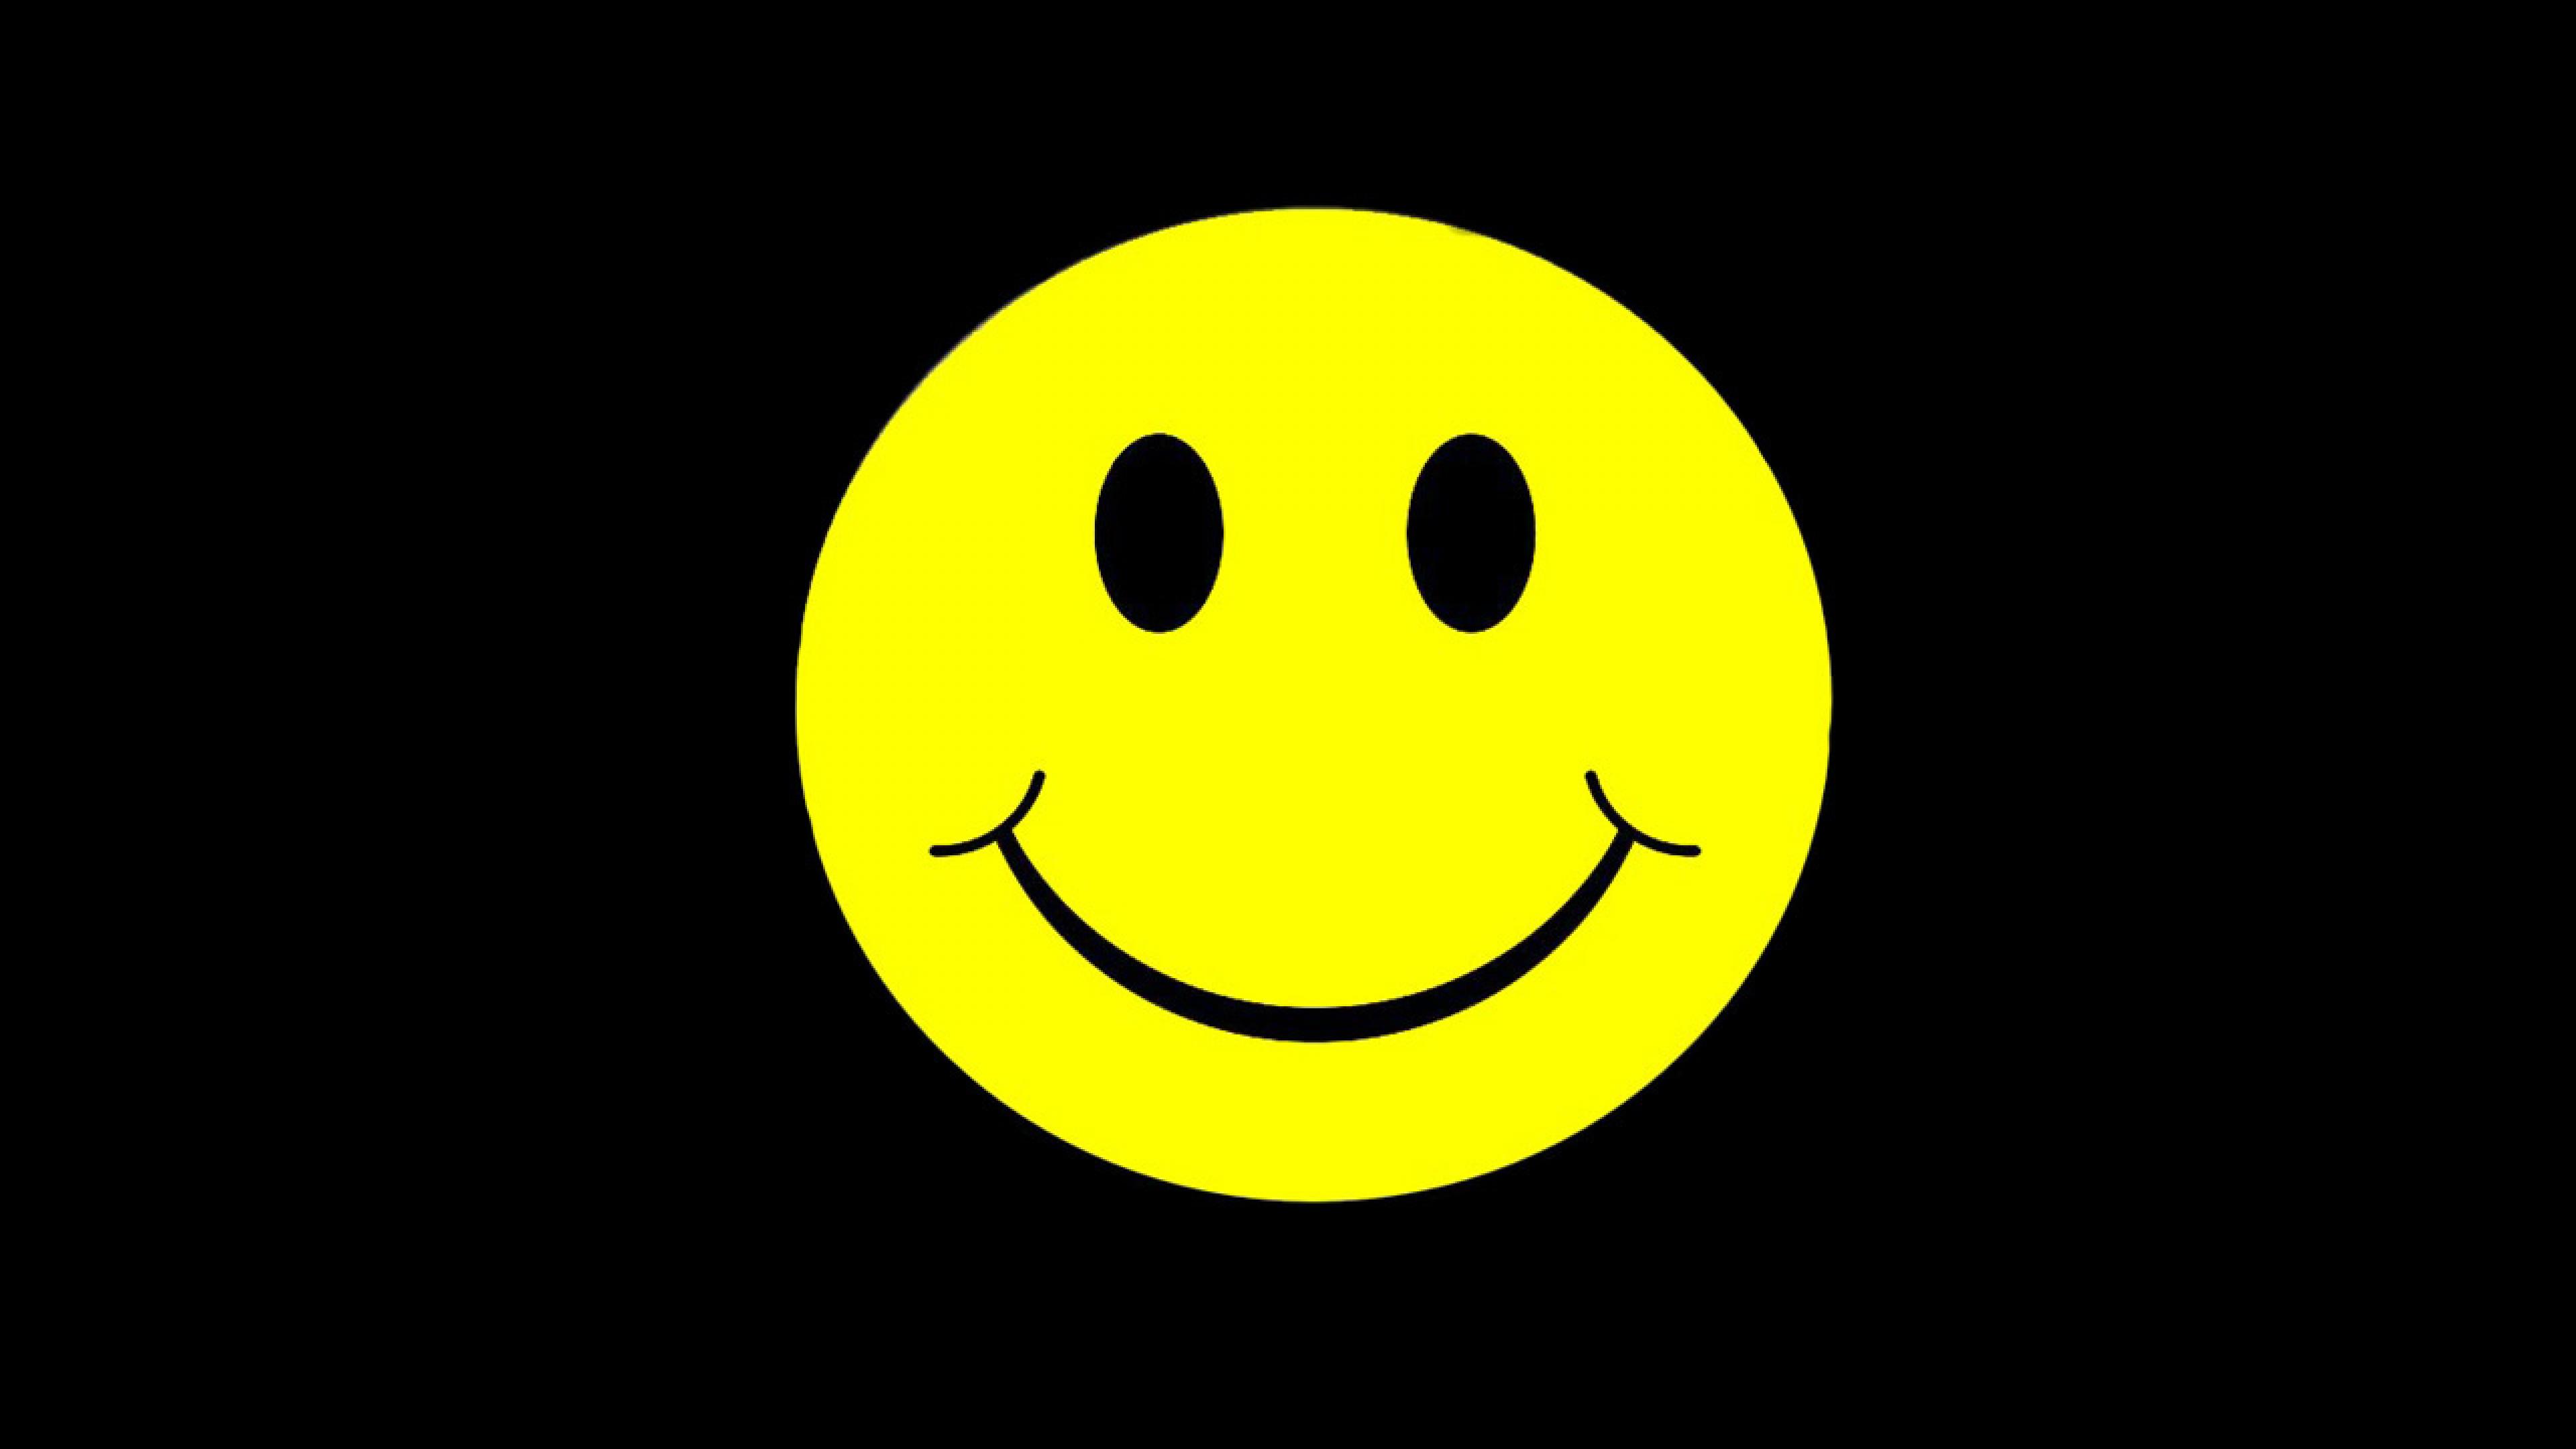 faccina sorridente,emoticon,nero,smiley,giallo,sorridi